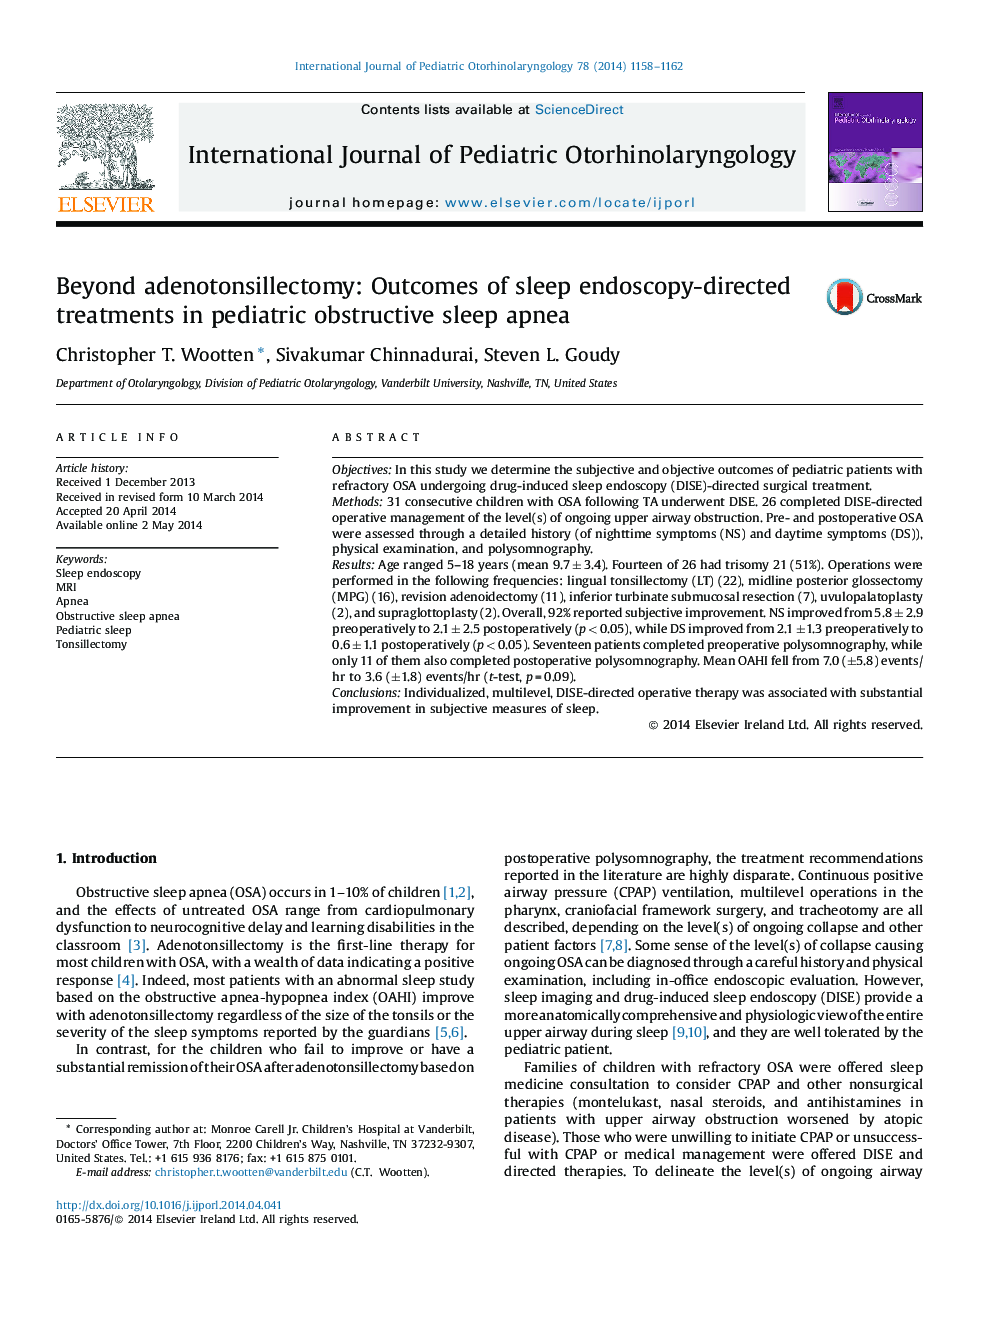 Beyond adenotonsillectomy: Outcomes of sleep endoscopy-directed treatments in pediatric obstructive sleep apnea